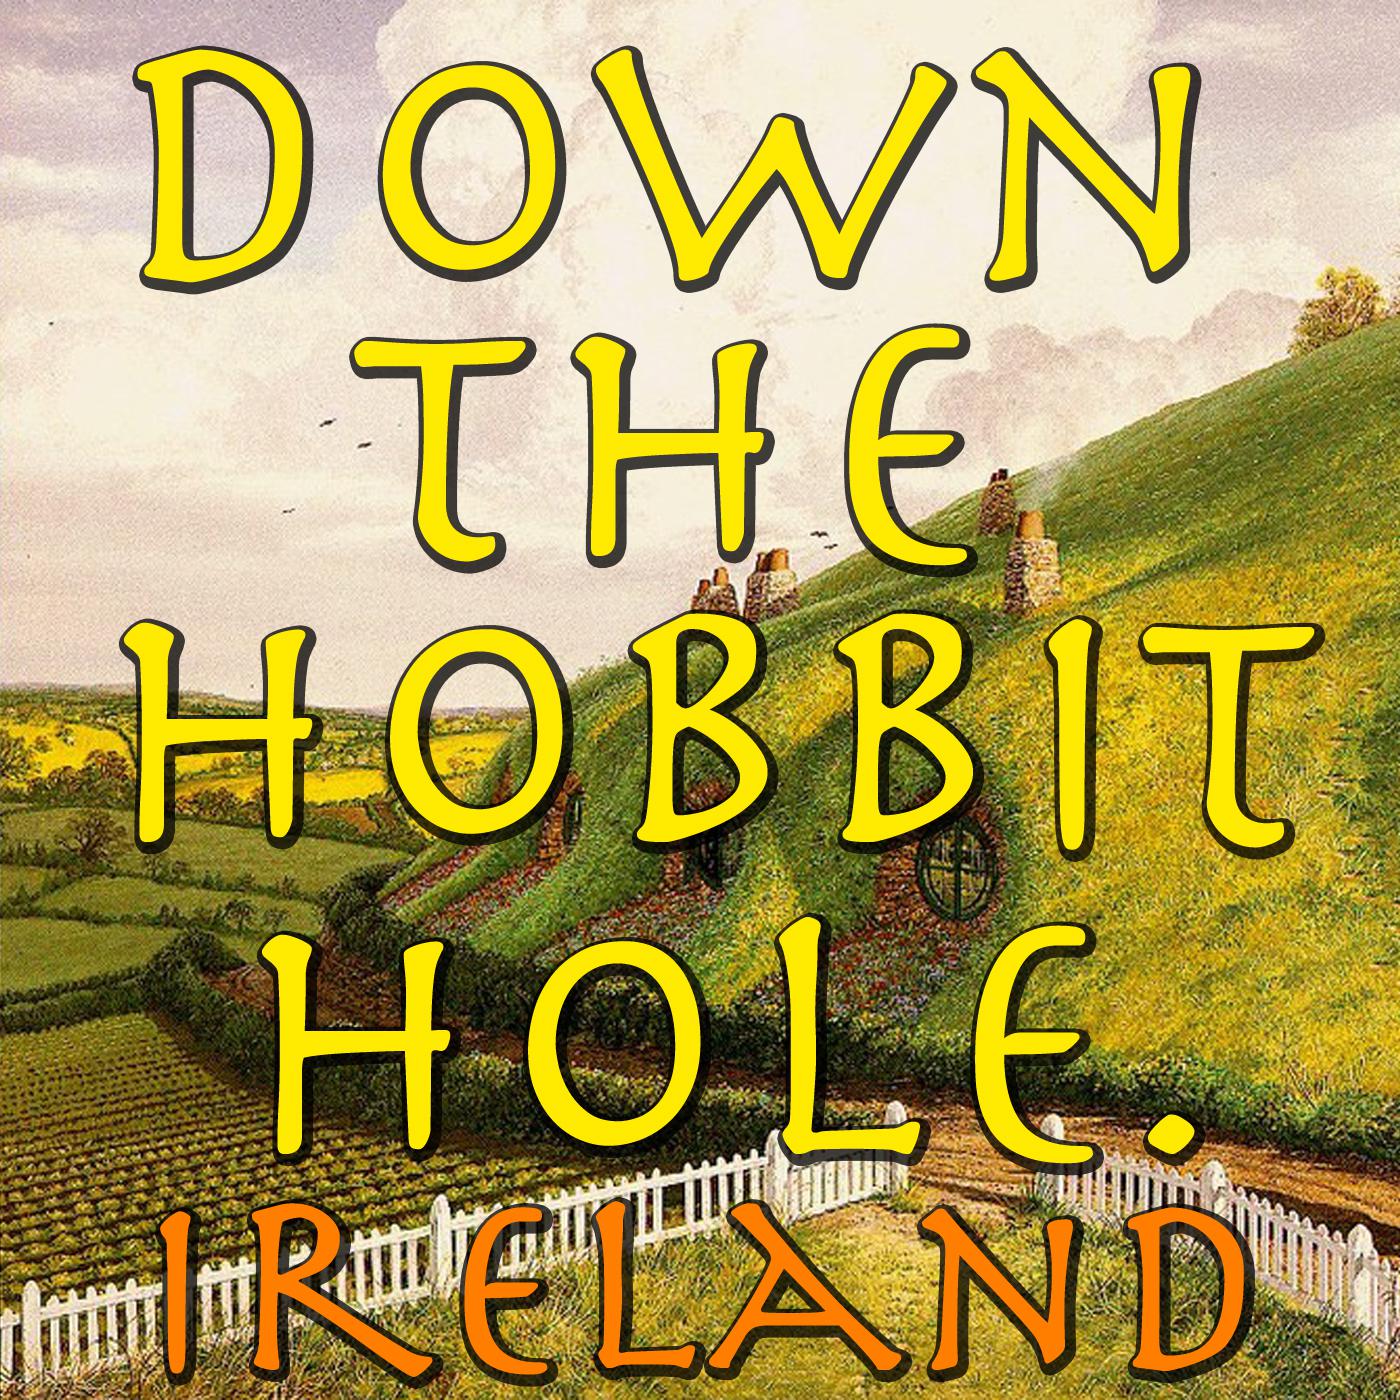 Down The Hobbit Hole. Ireland